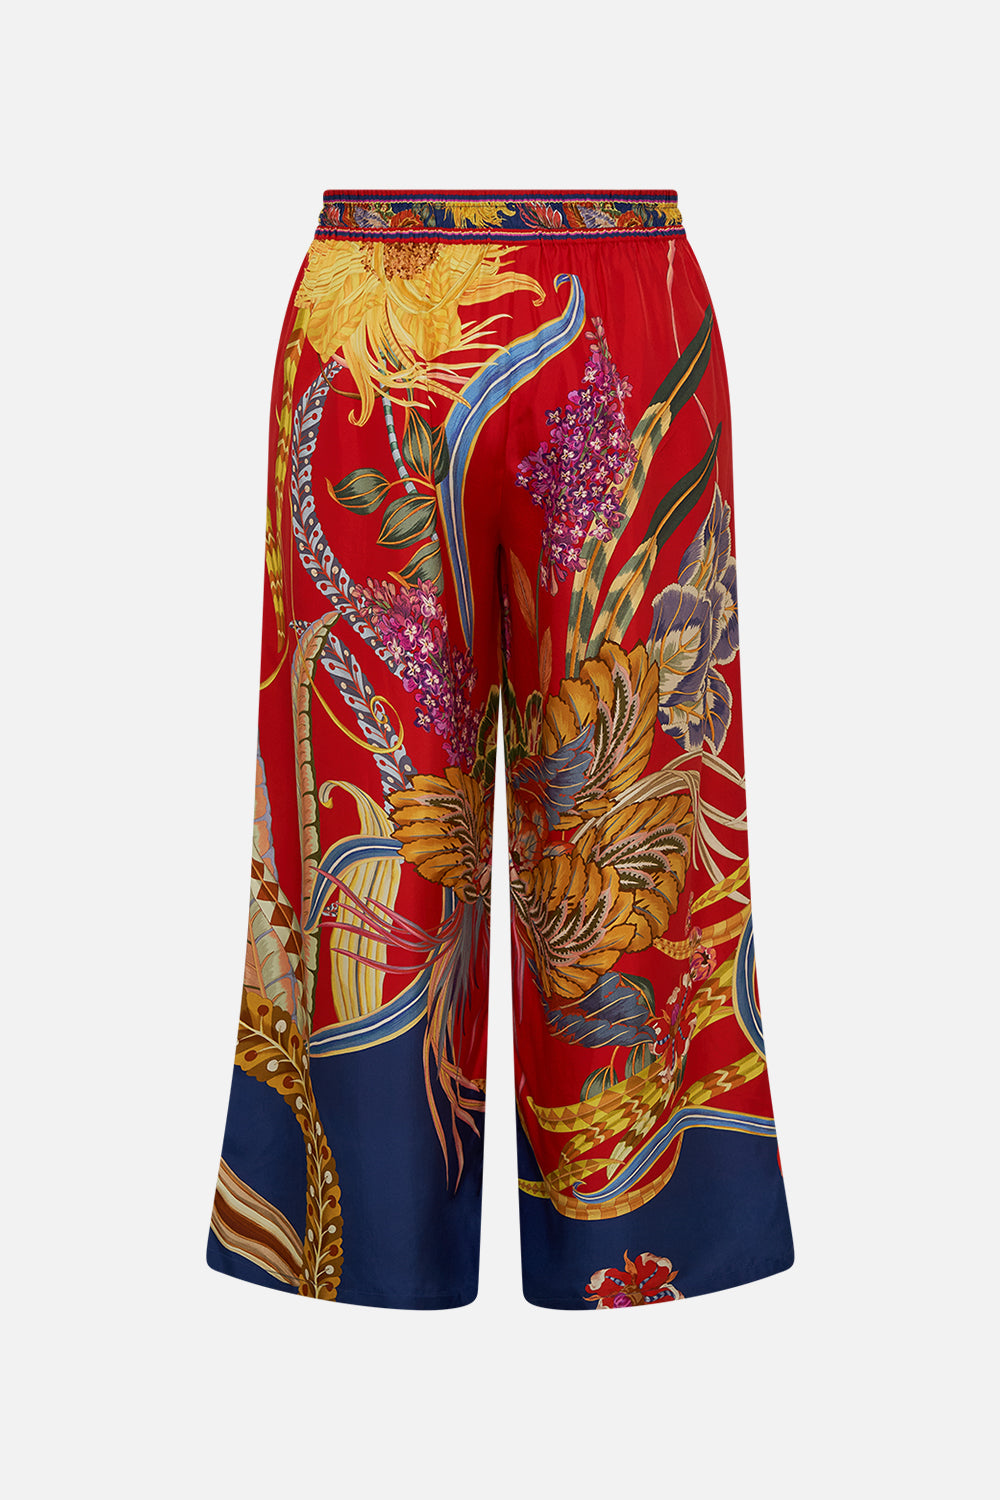 CAMILLA silk pants in Through Vincents Eyes print